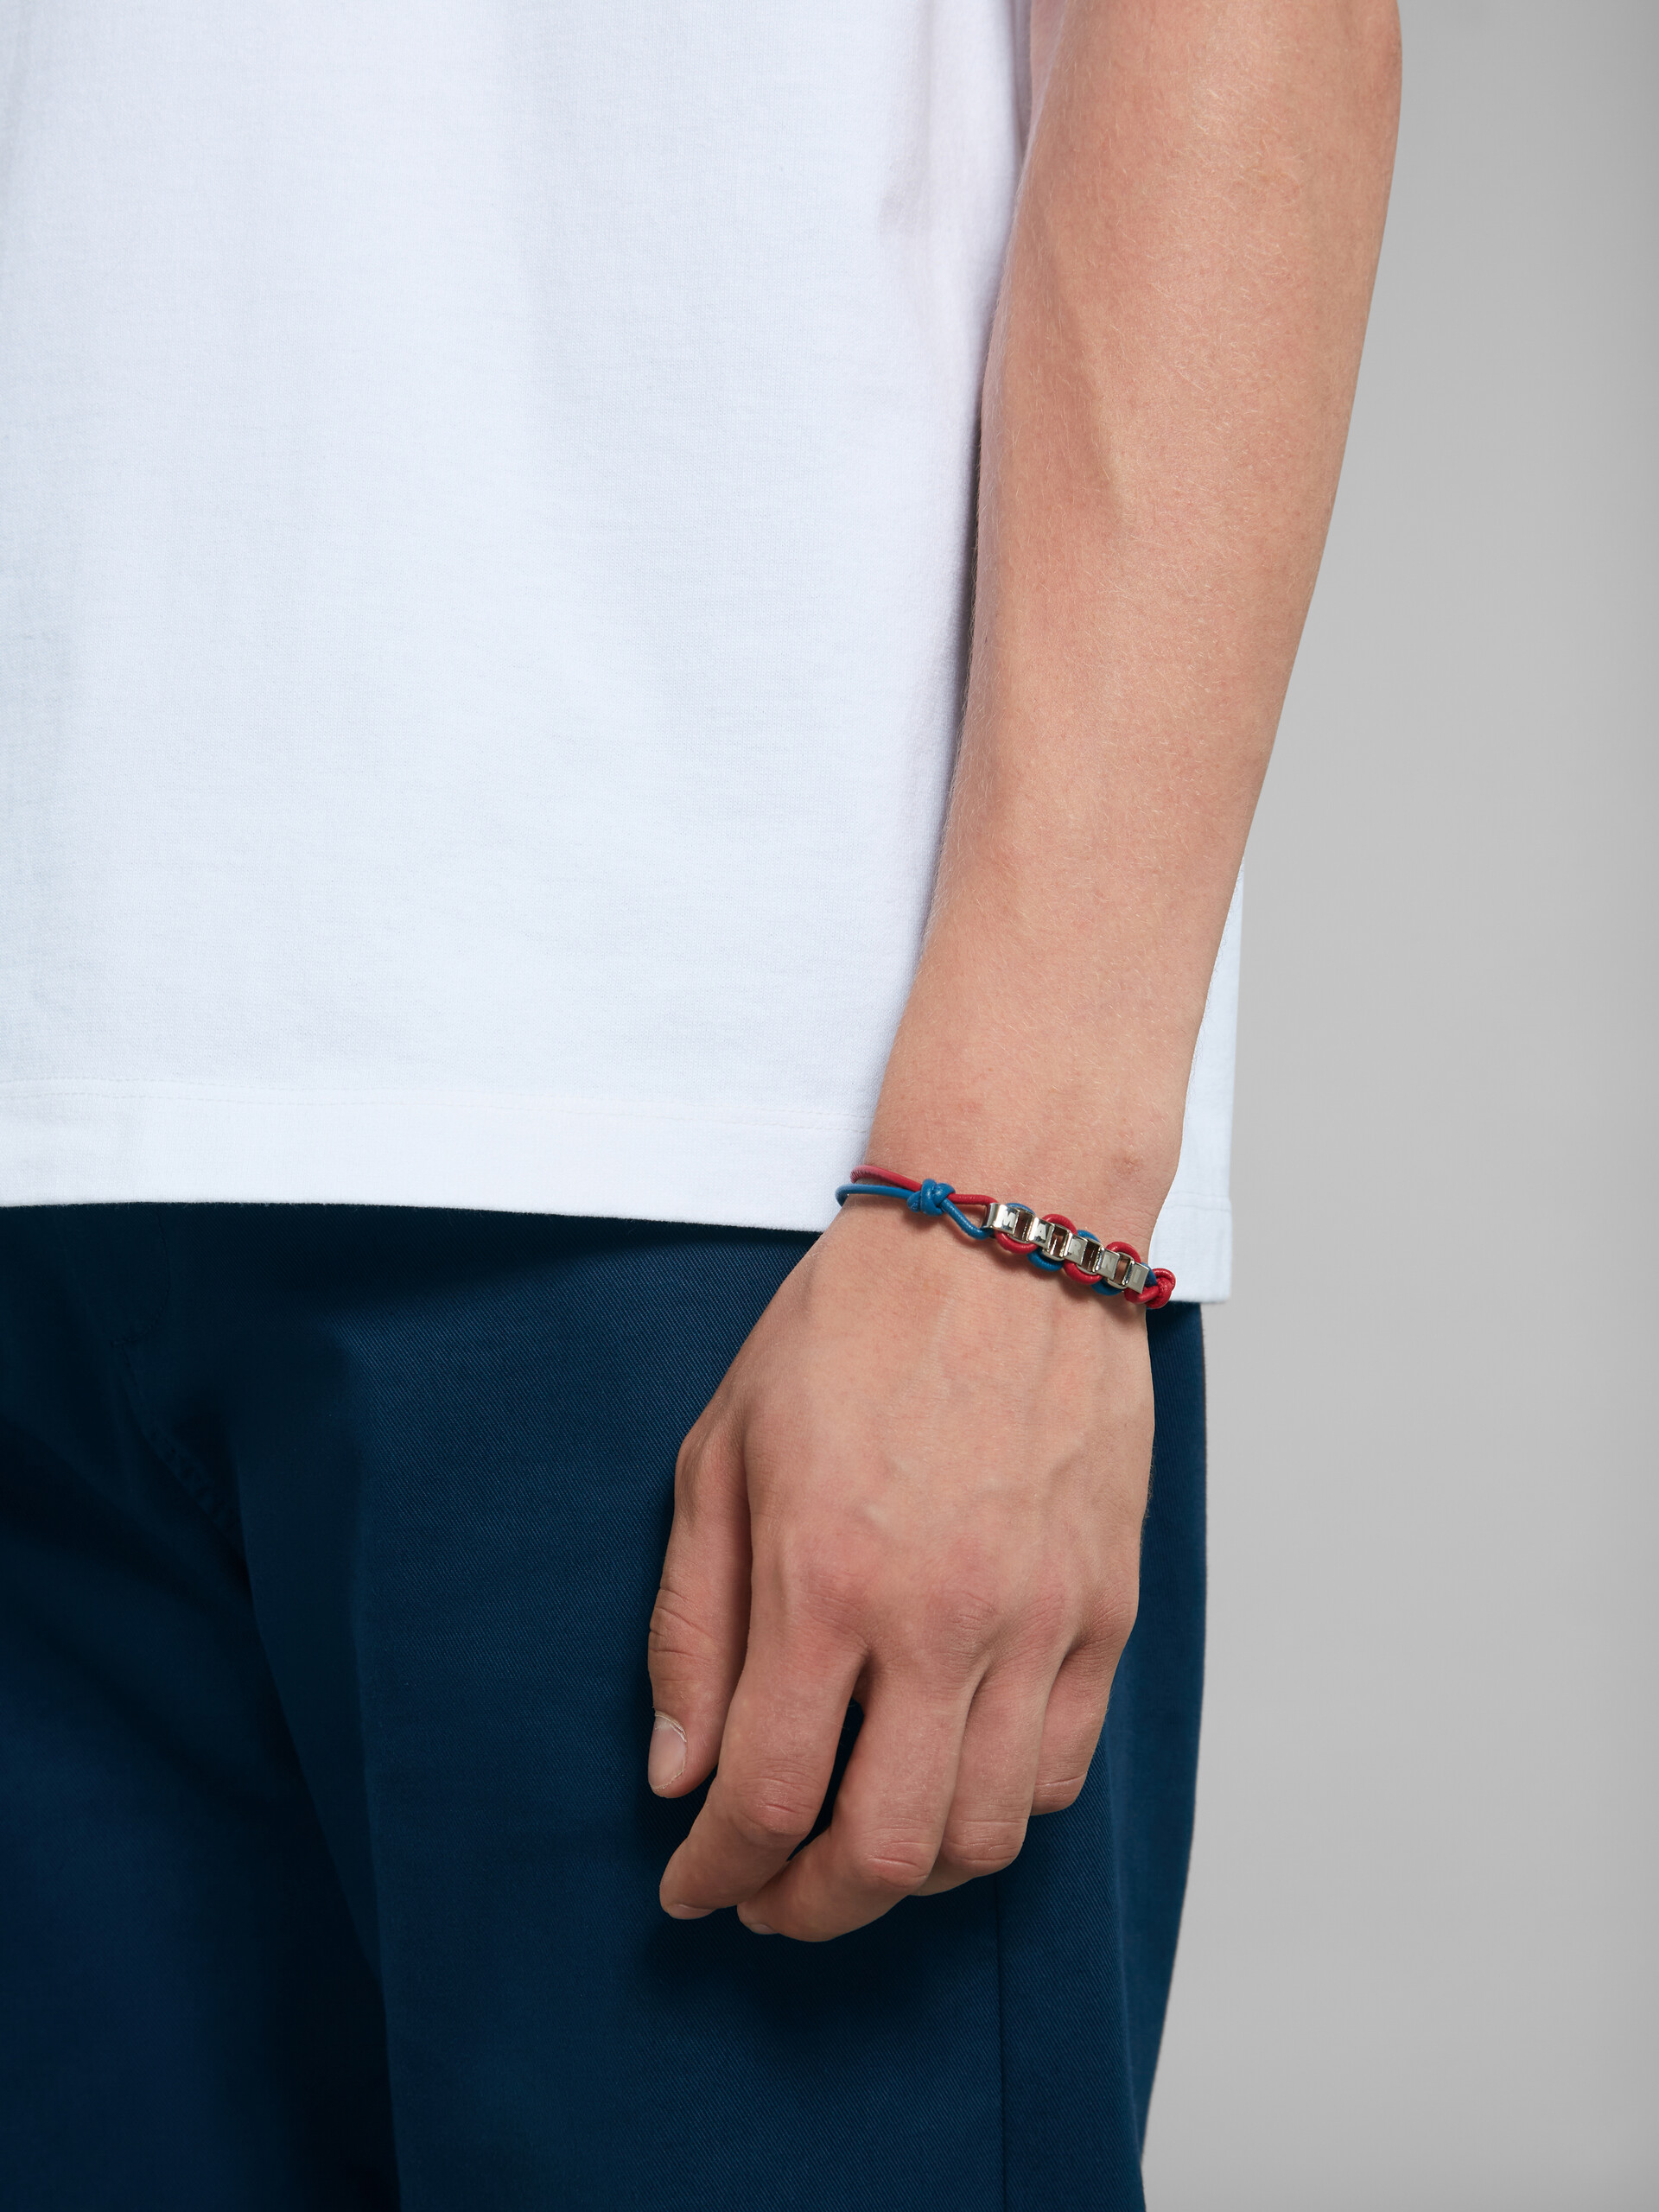 Armband aus Leder mit Marni-Logo in Rot und Blau - Armbänder - Image 2